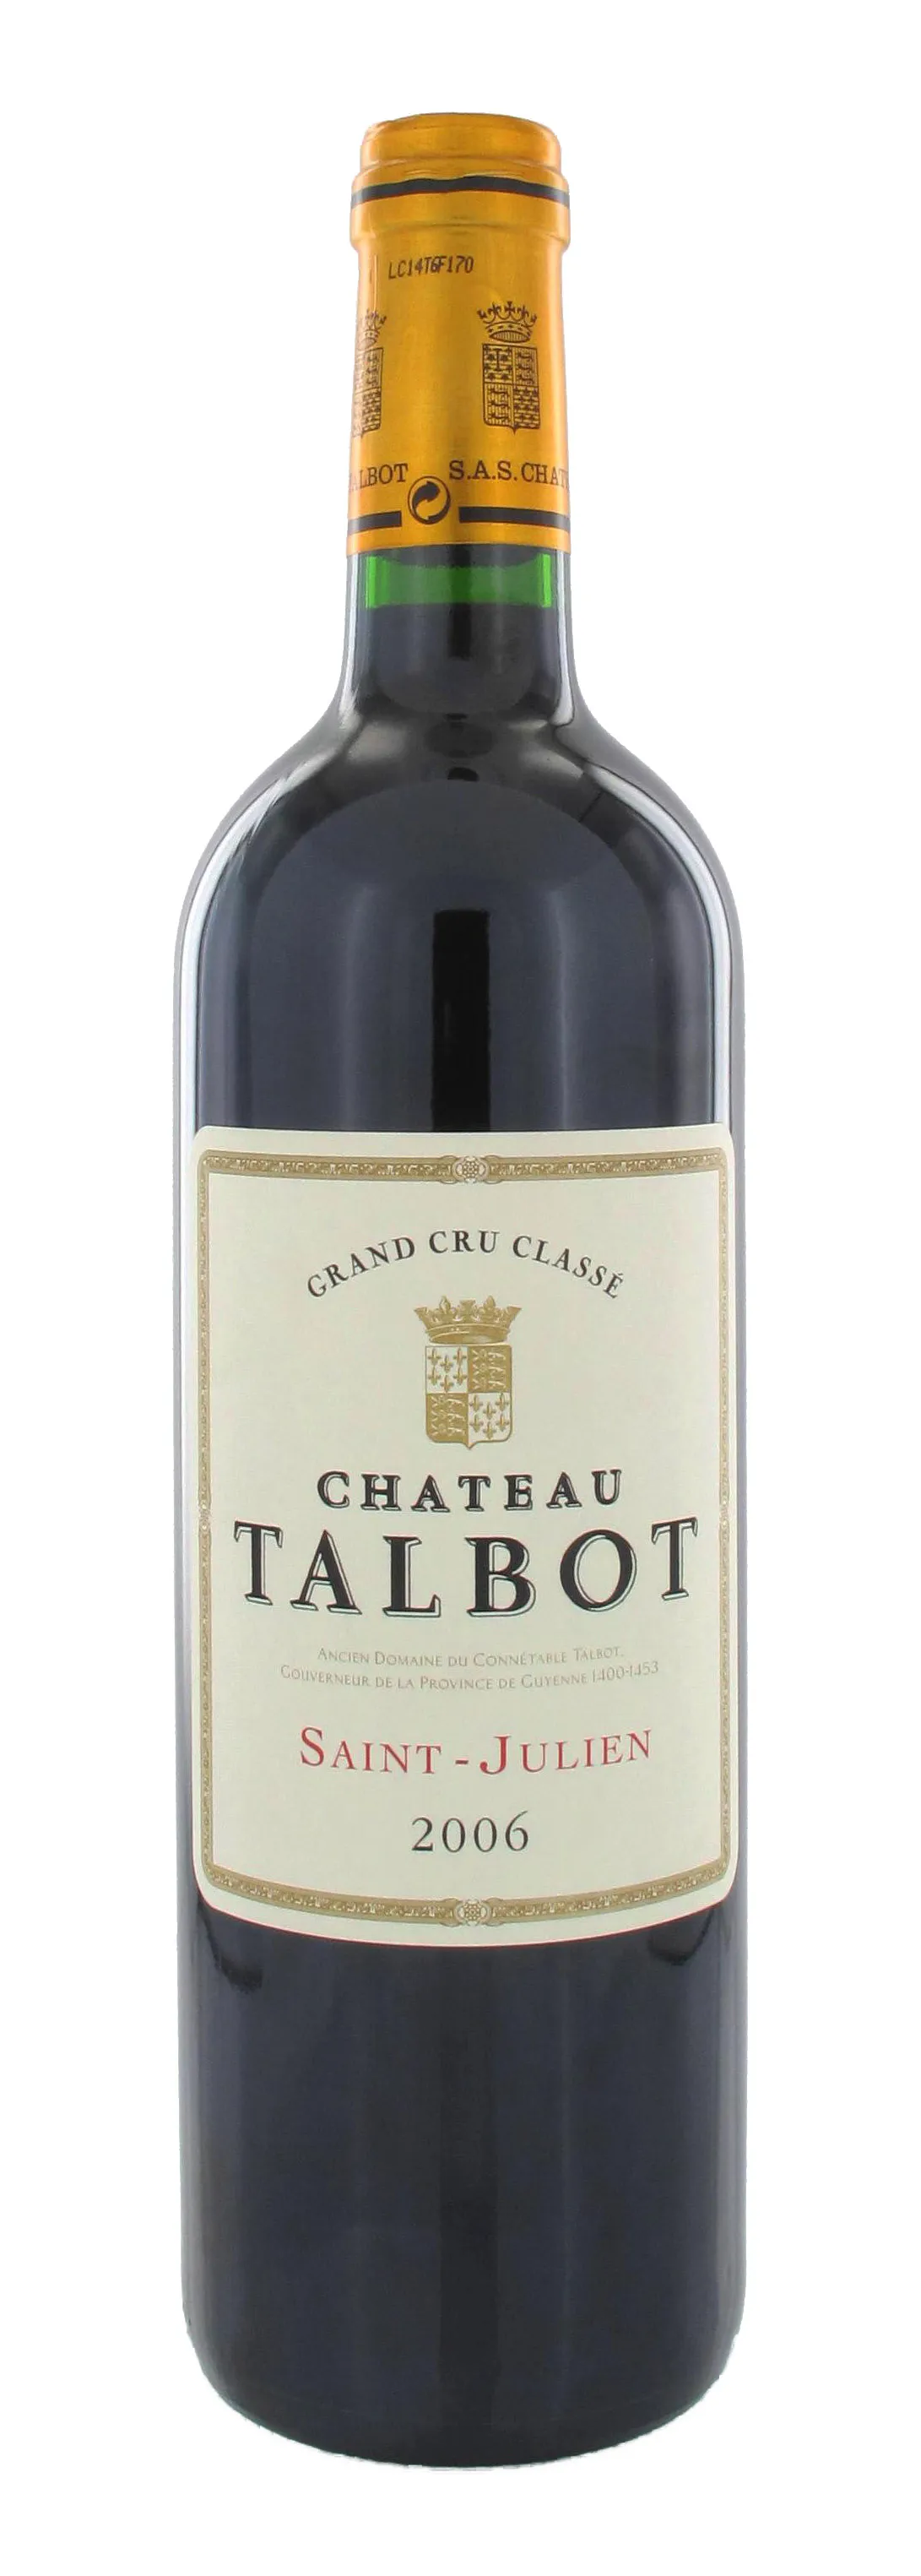 Talbot Saint Julien GC